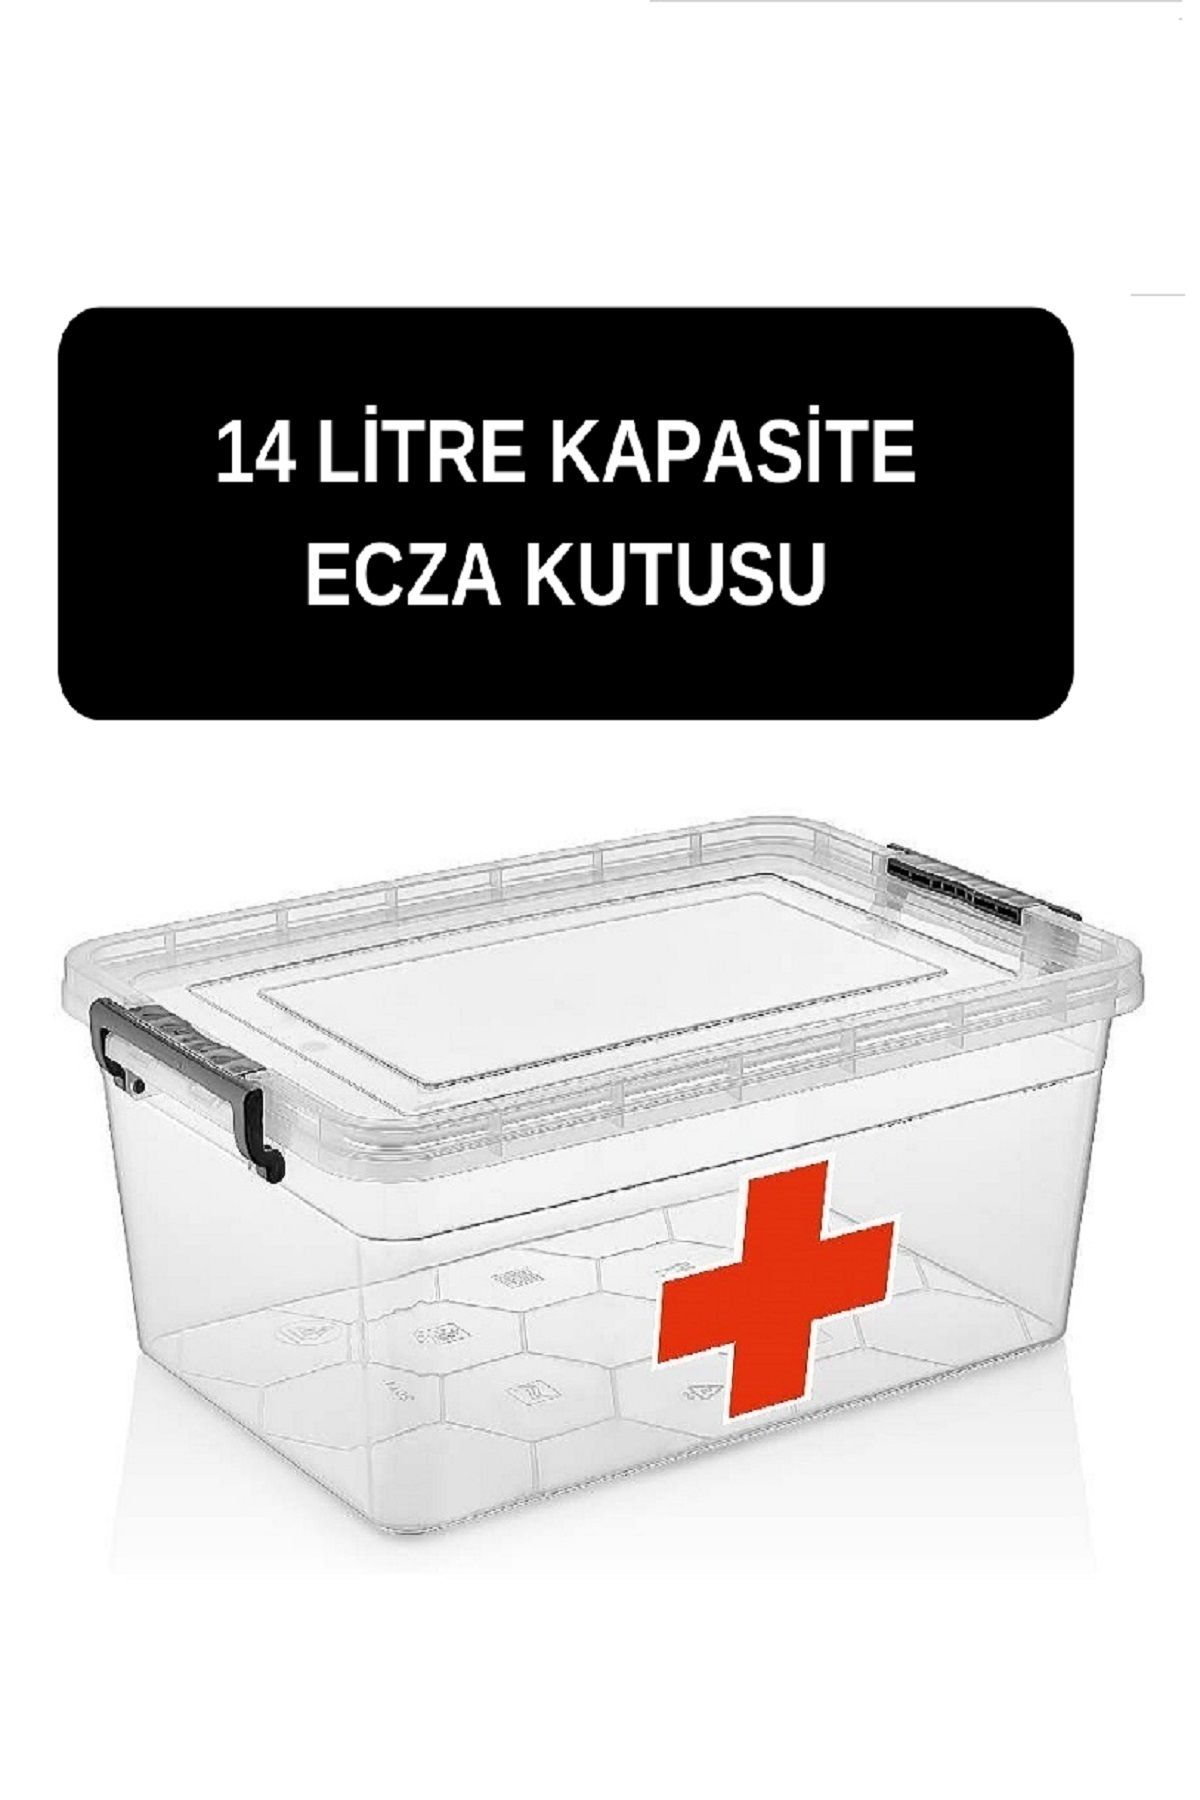 DEEMBRO Ecza kutusu 14 lt ilk yardım ecza dolabı çantası ilaç kutusu ilaç saklama kabı kutusu ilaç dolabı